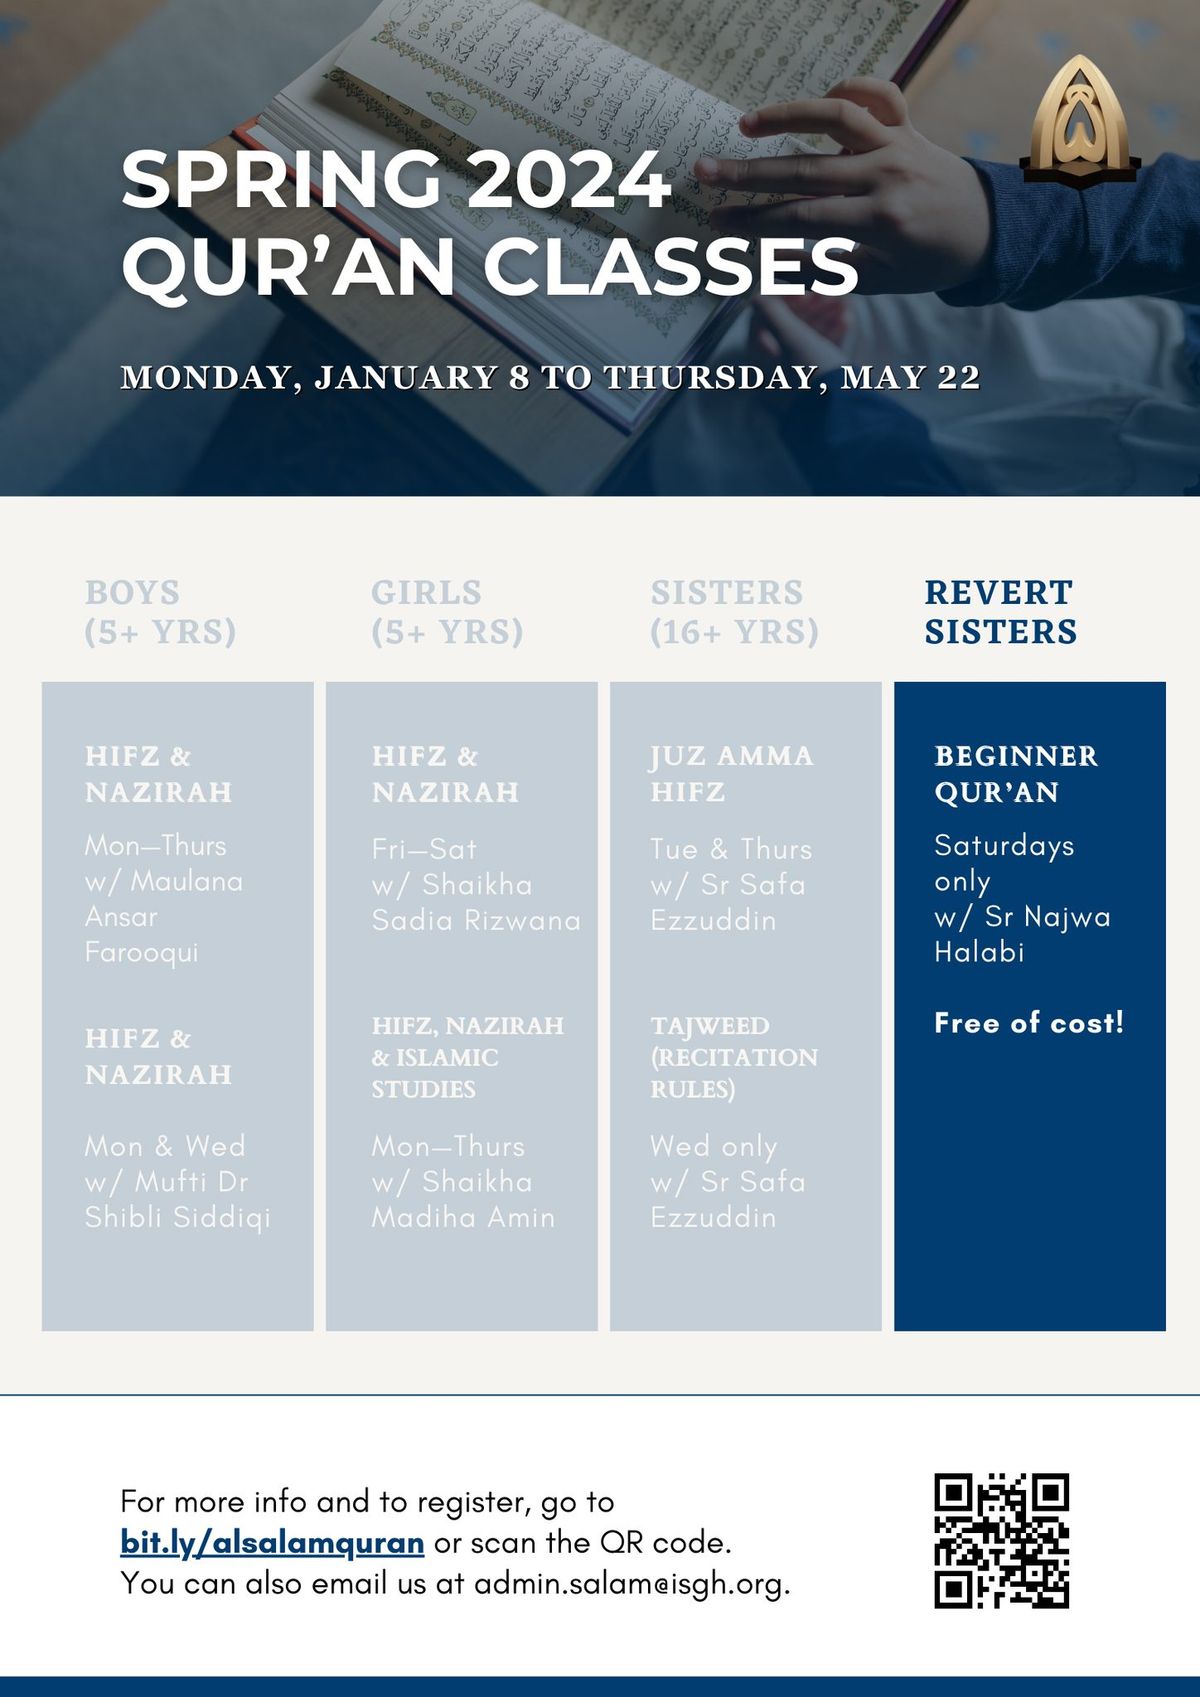 Qur'an for Beginners I (Revert Sisters Only) w\/ Sr Najwa Halabi